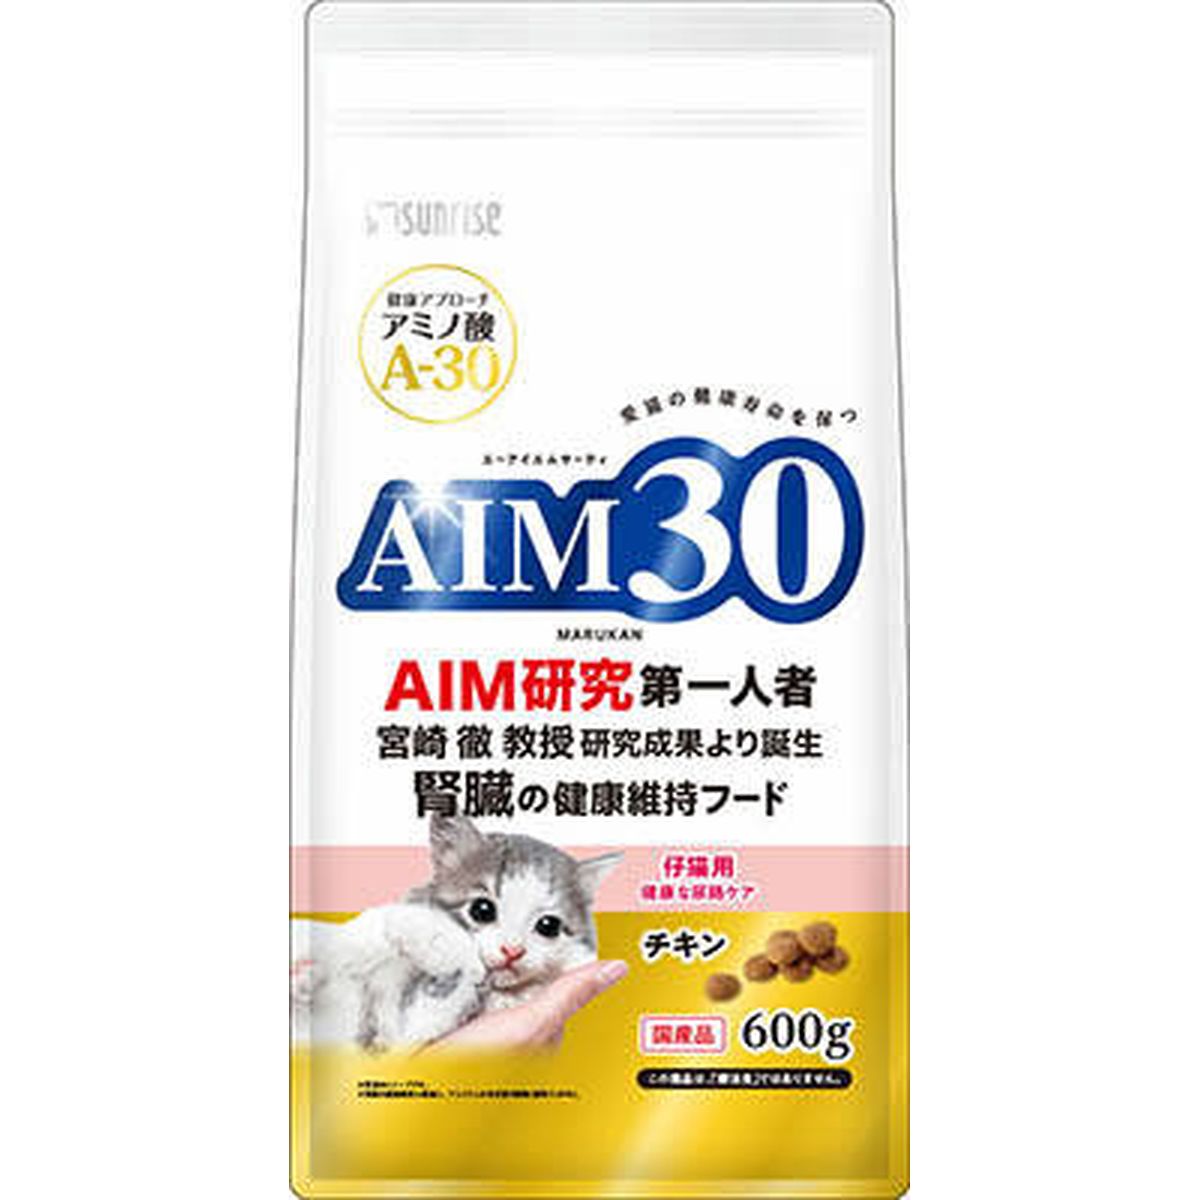 AIM30 仔猫用 健康な尿路ケア600g×10袋